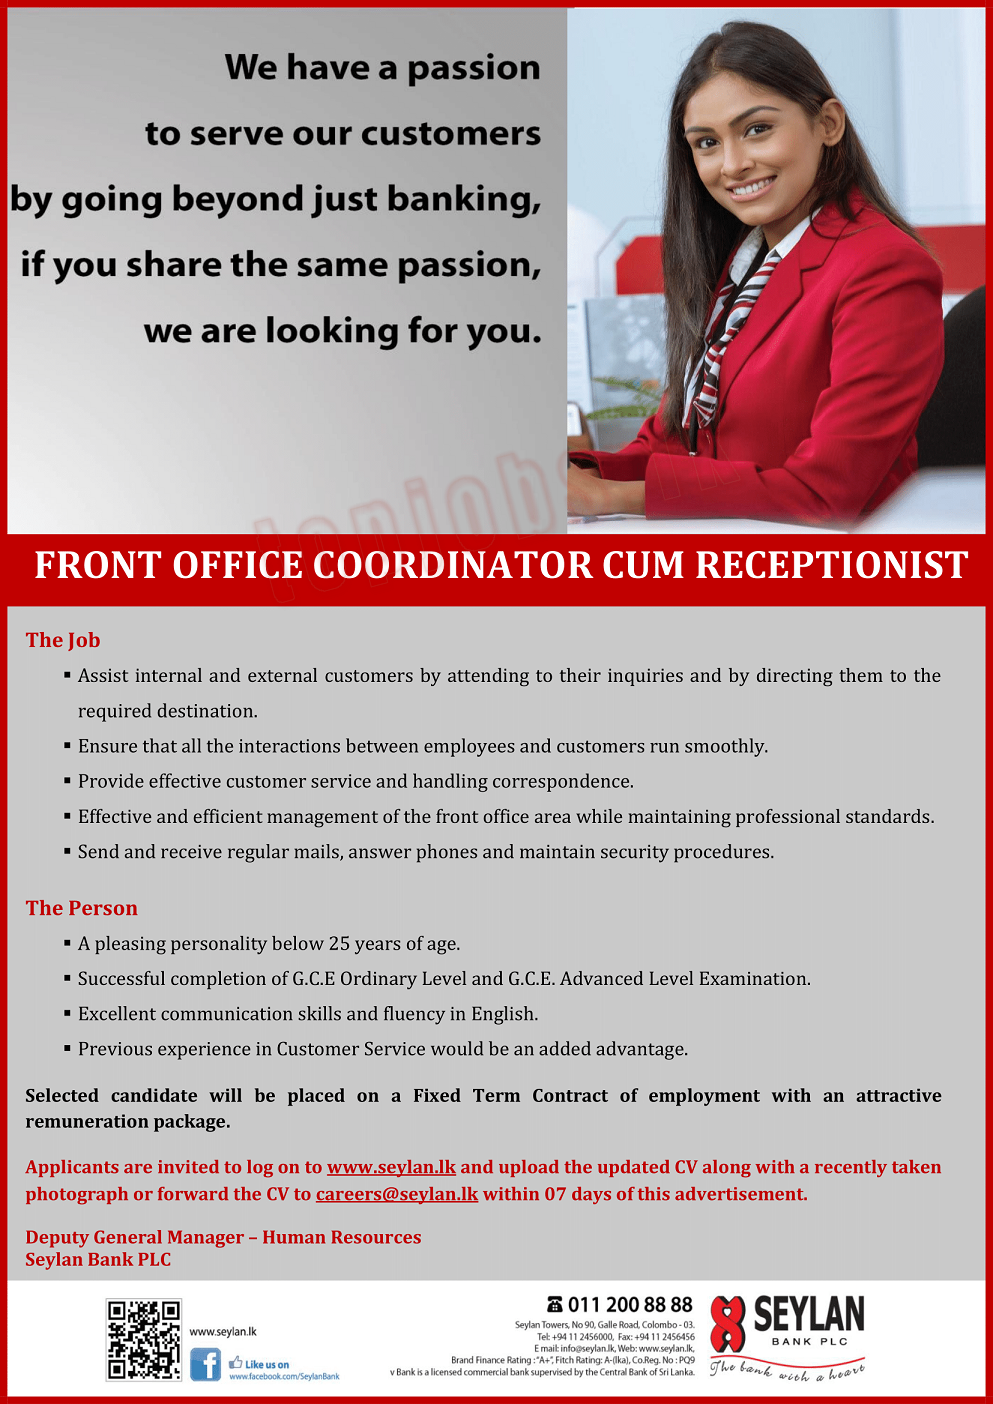 Front Office Coordinator Receptionist Jobs in Seylan Bank English Details